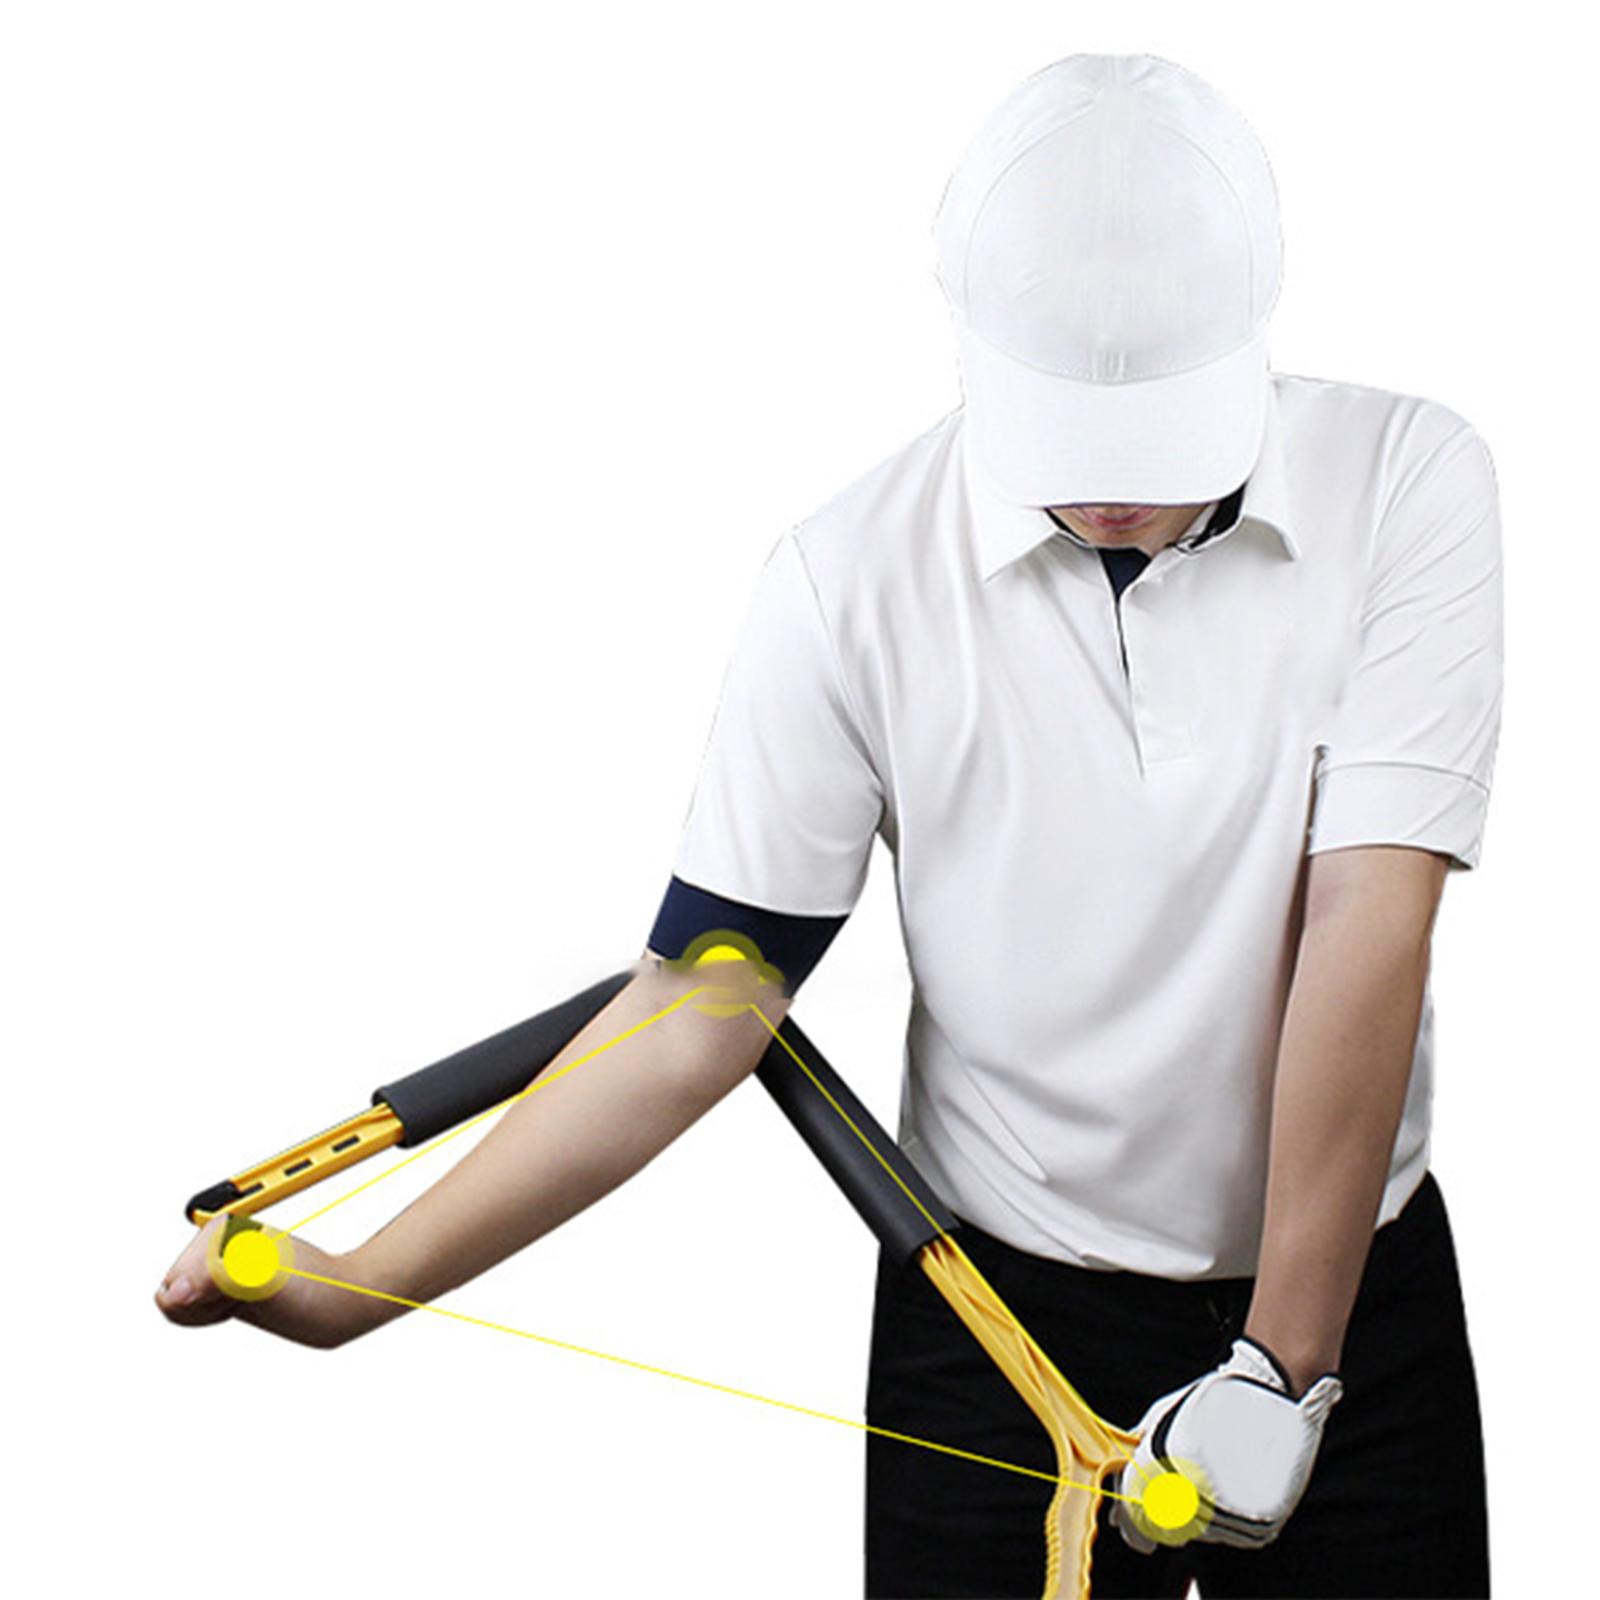 Golf　Control　Equipment　Equipment　Aid　Indoor　for　Improve　Arm　Swing　Swing　Practice　Training　yellow　Golf　Accessories　Wrist　Training